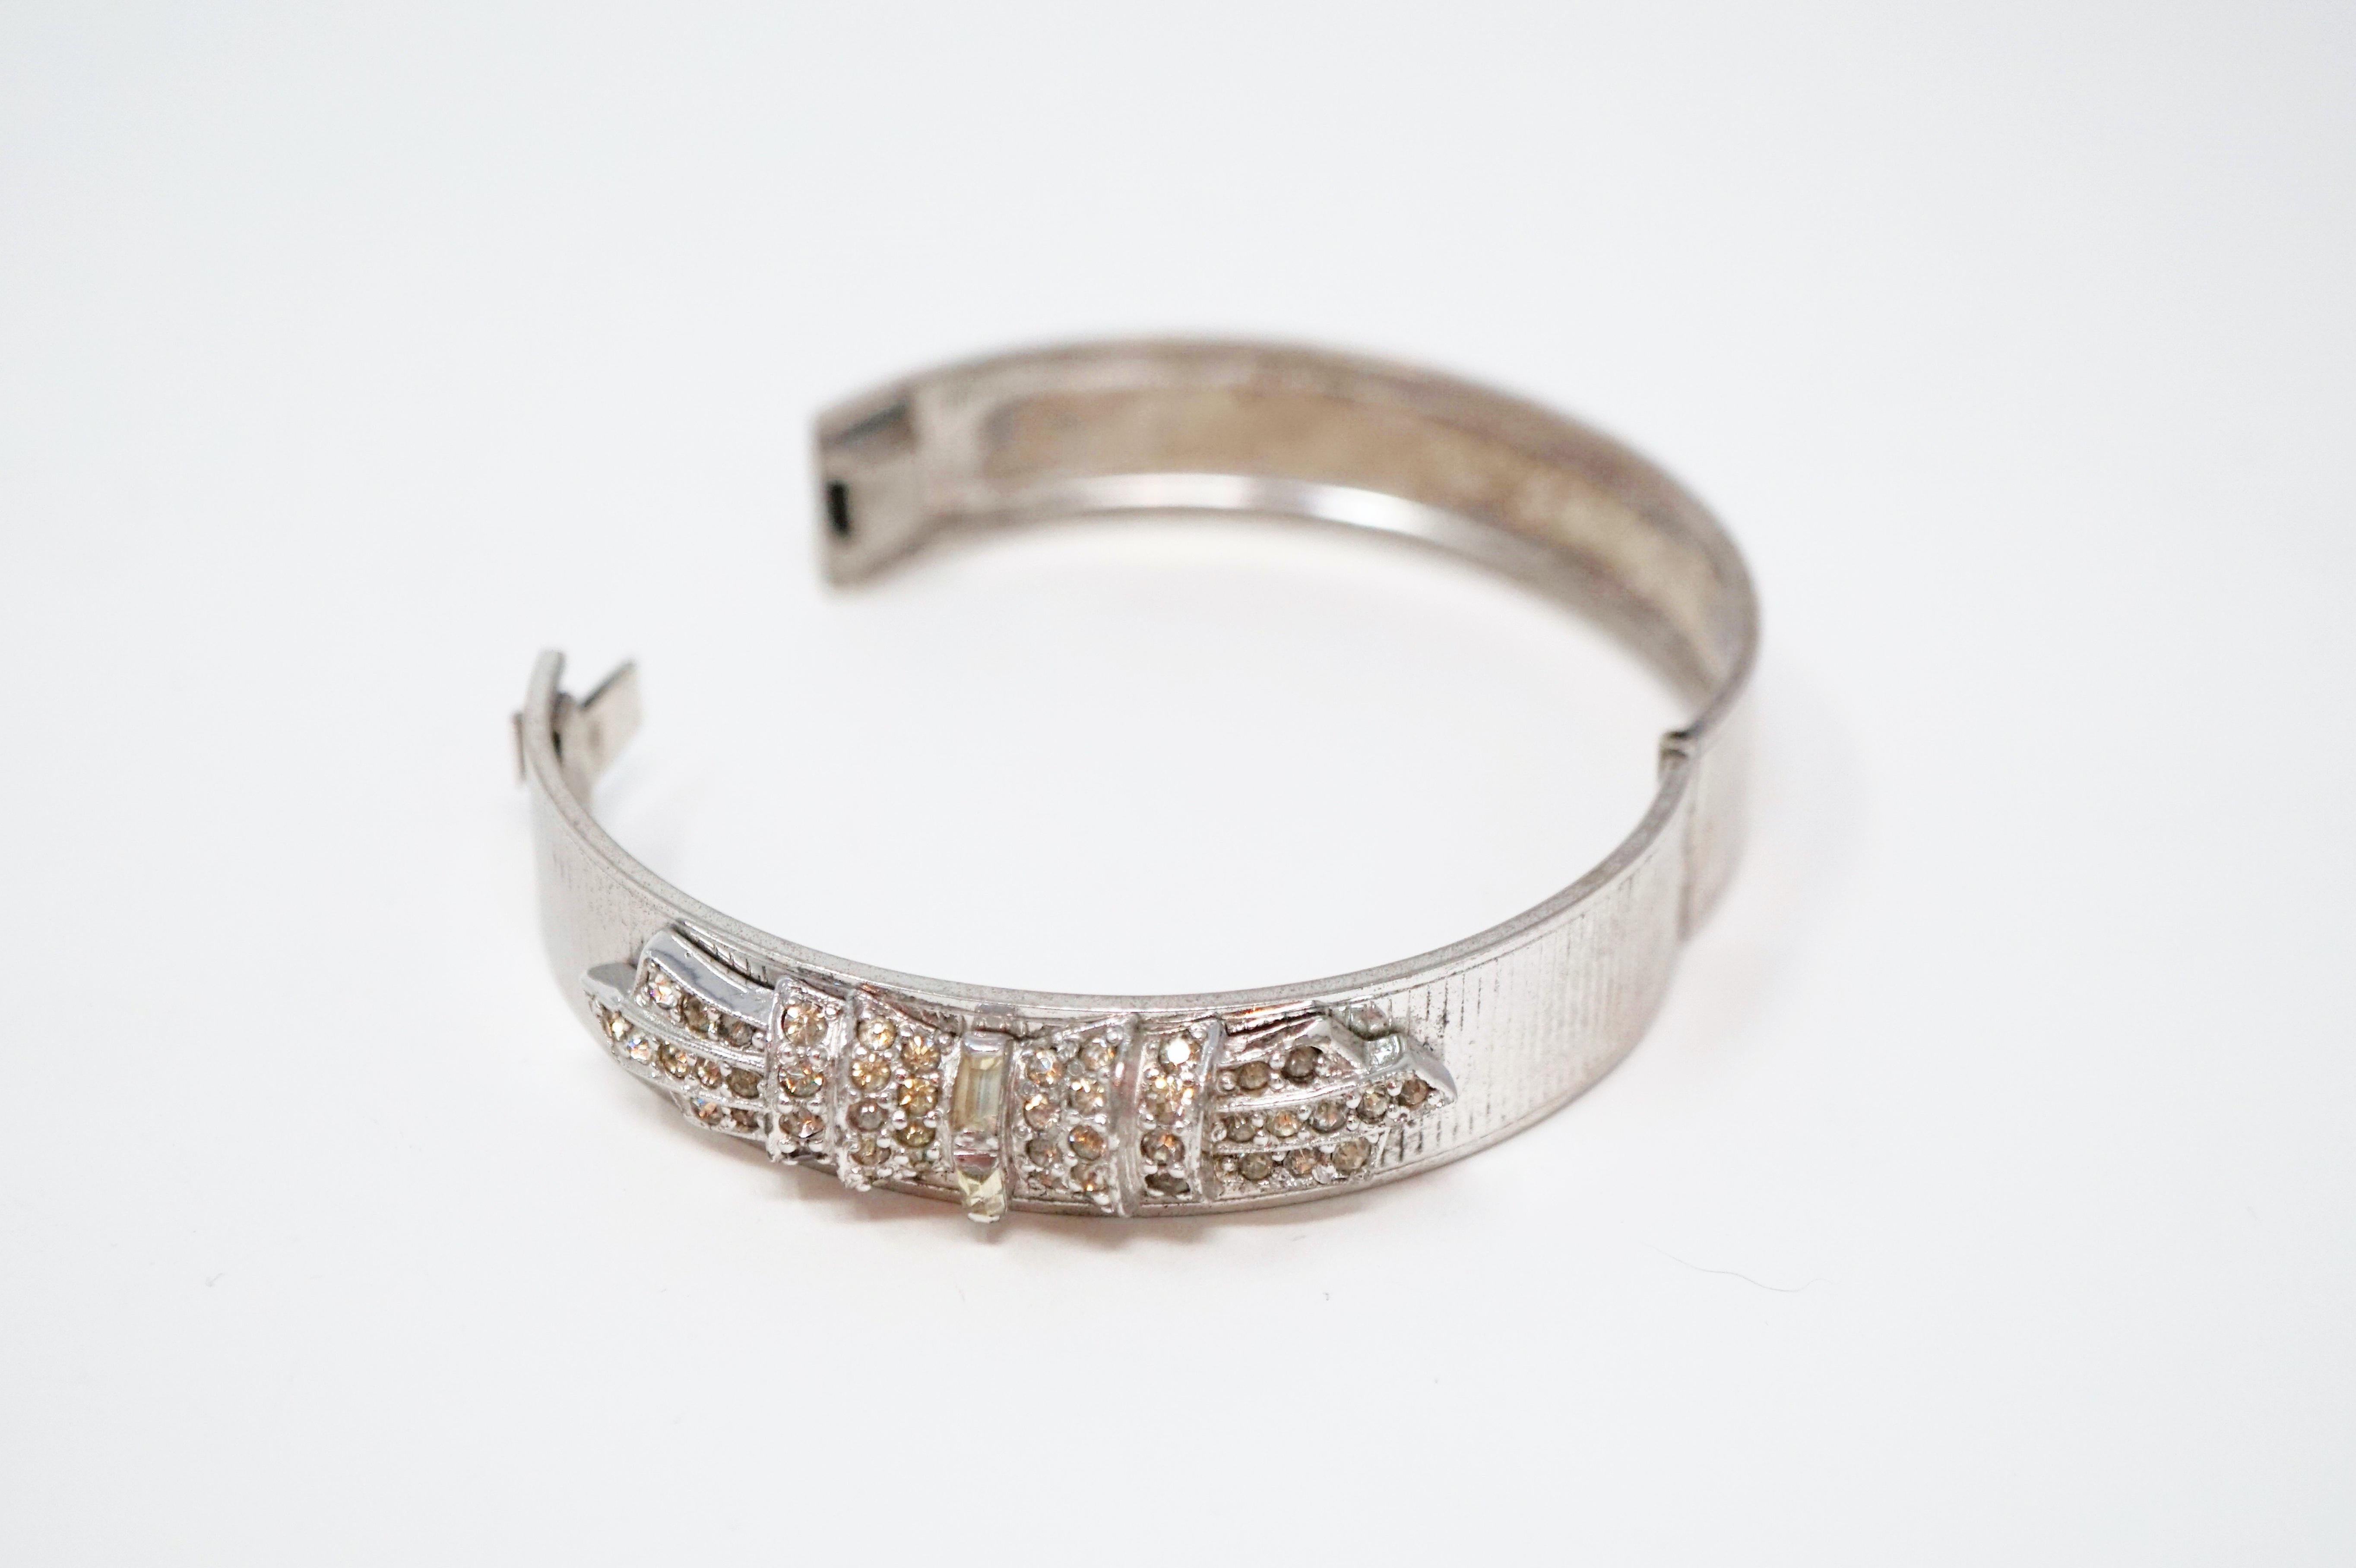 Women's Vintage 1940s Sterling Silver Bangle Bracelet with Rhinestones by Harry Iskin